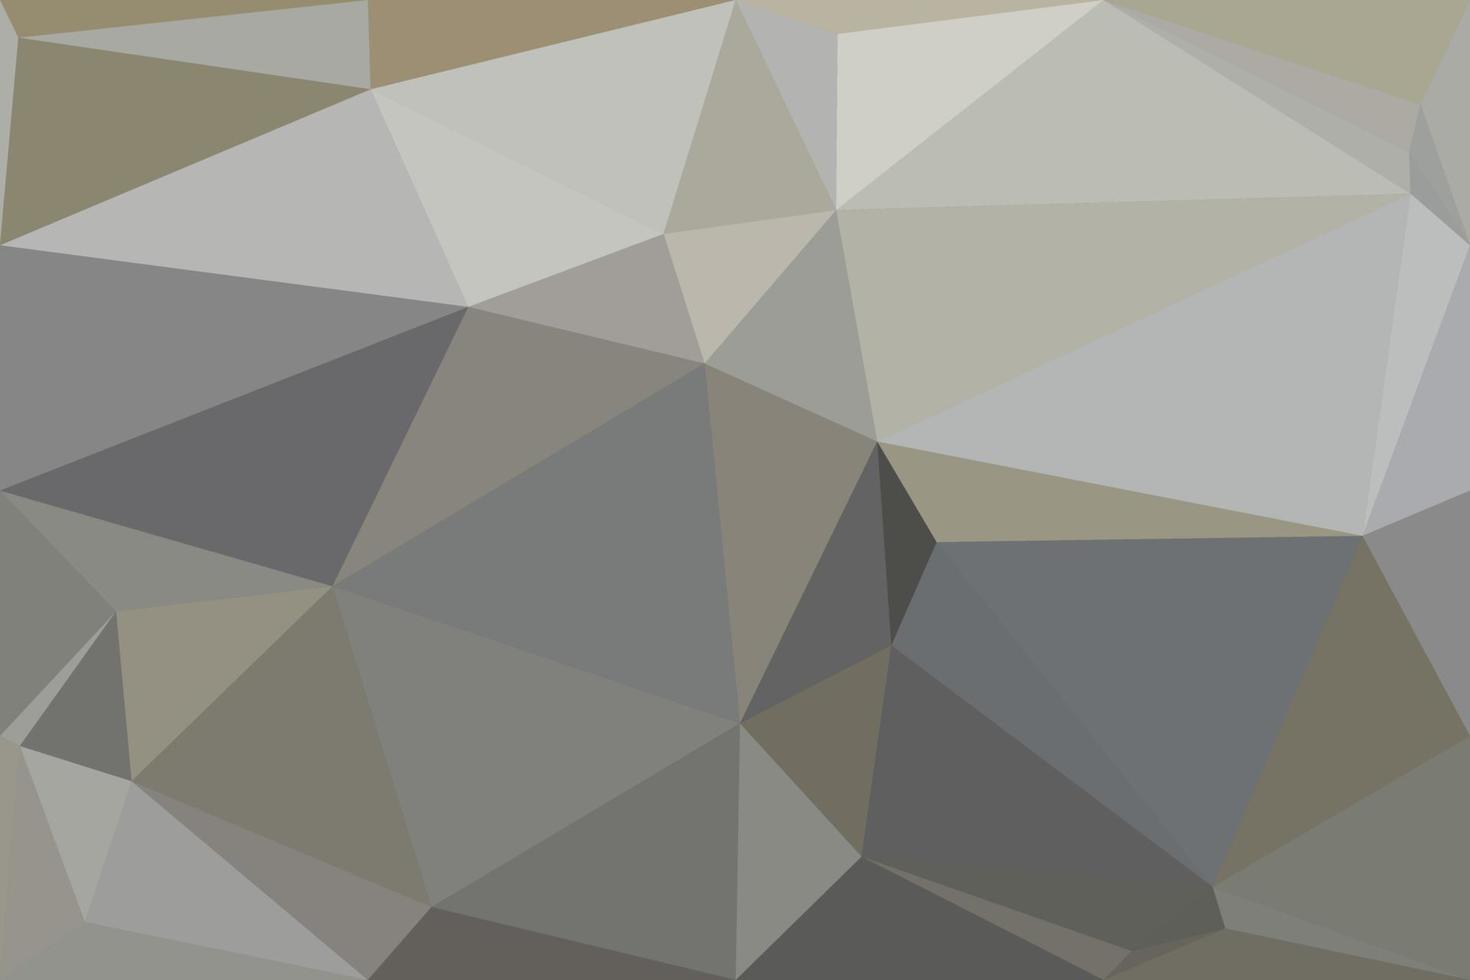 fundo geométrico poligonal abstrato feito de triângulos. vetor